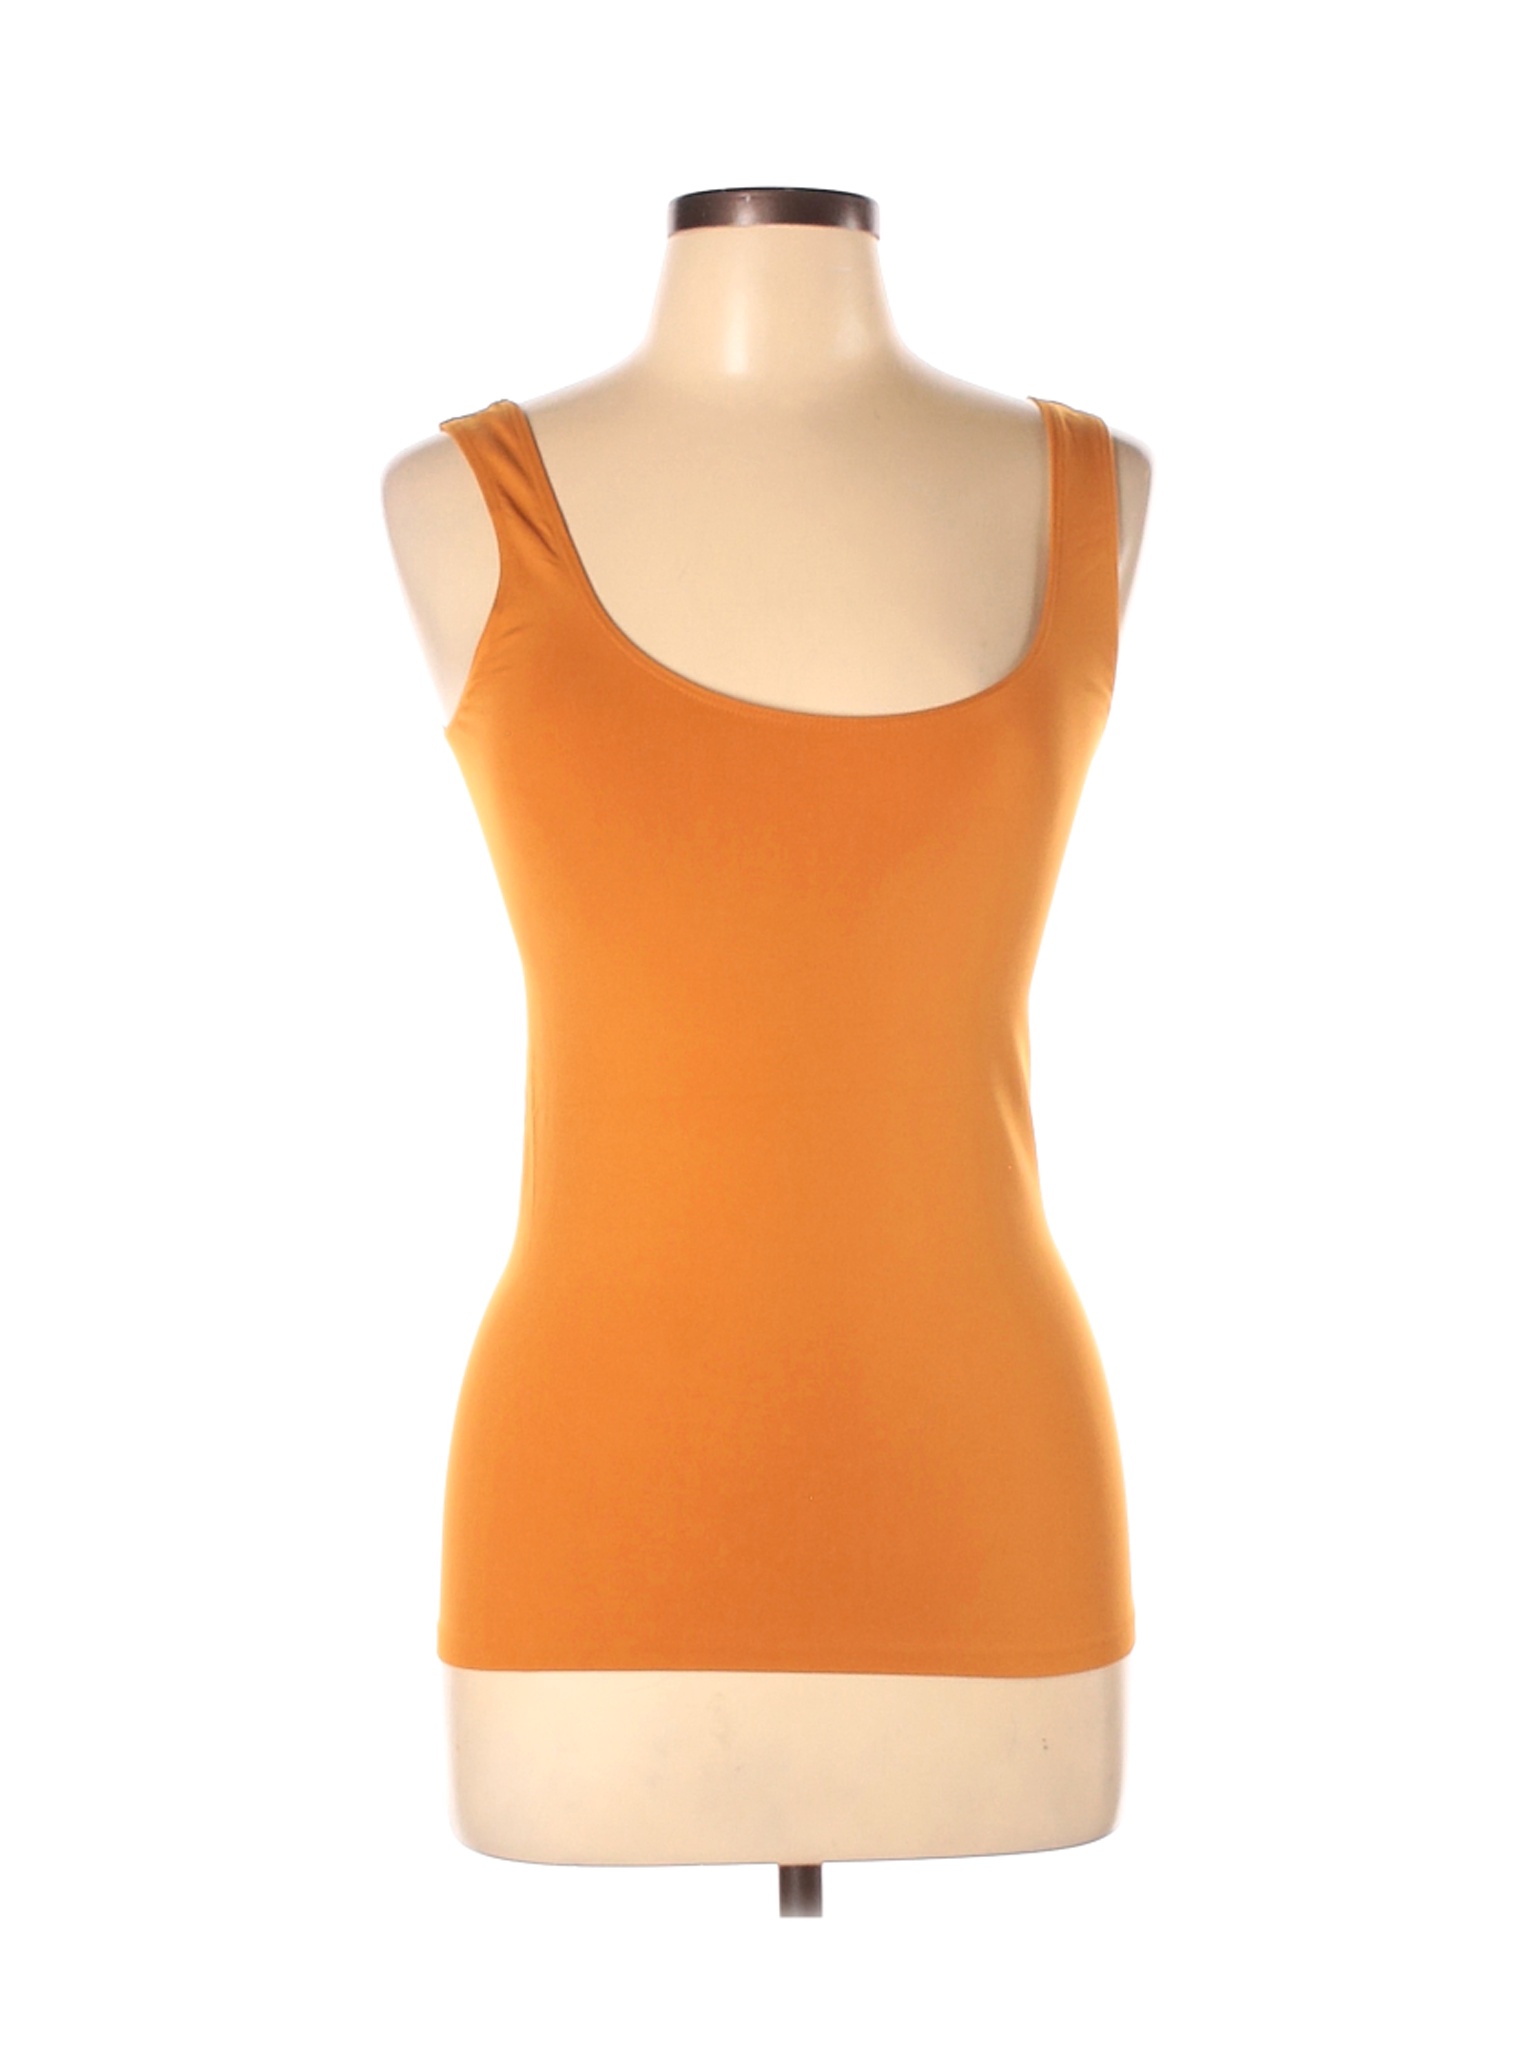 The Limited Women Orange Tank Top L | eBay